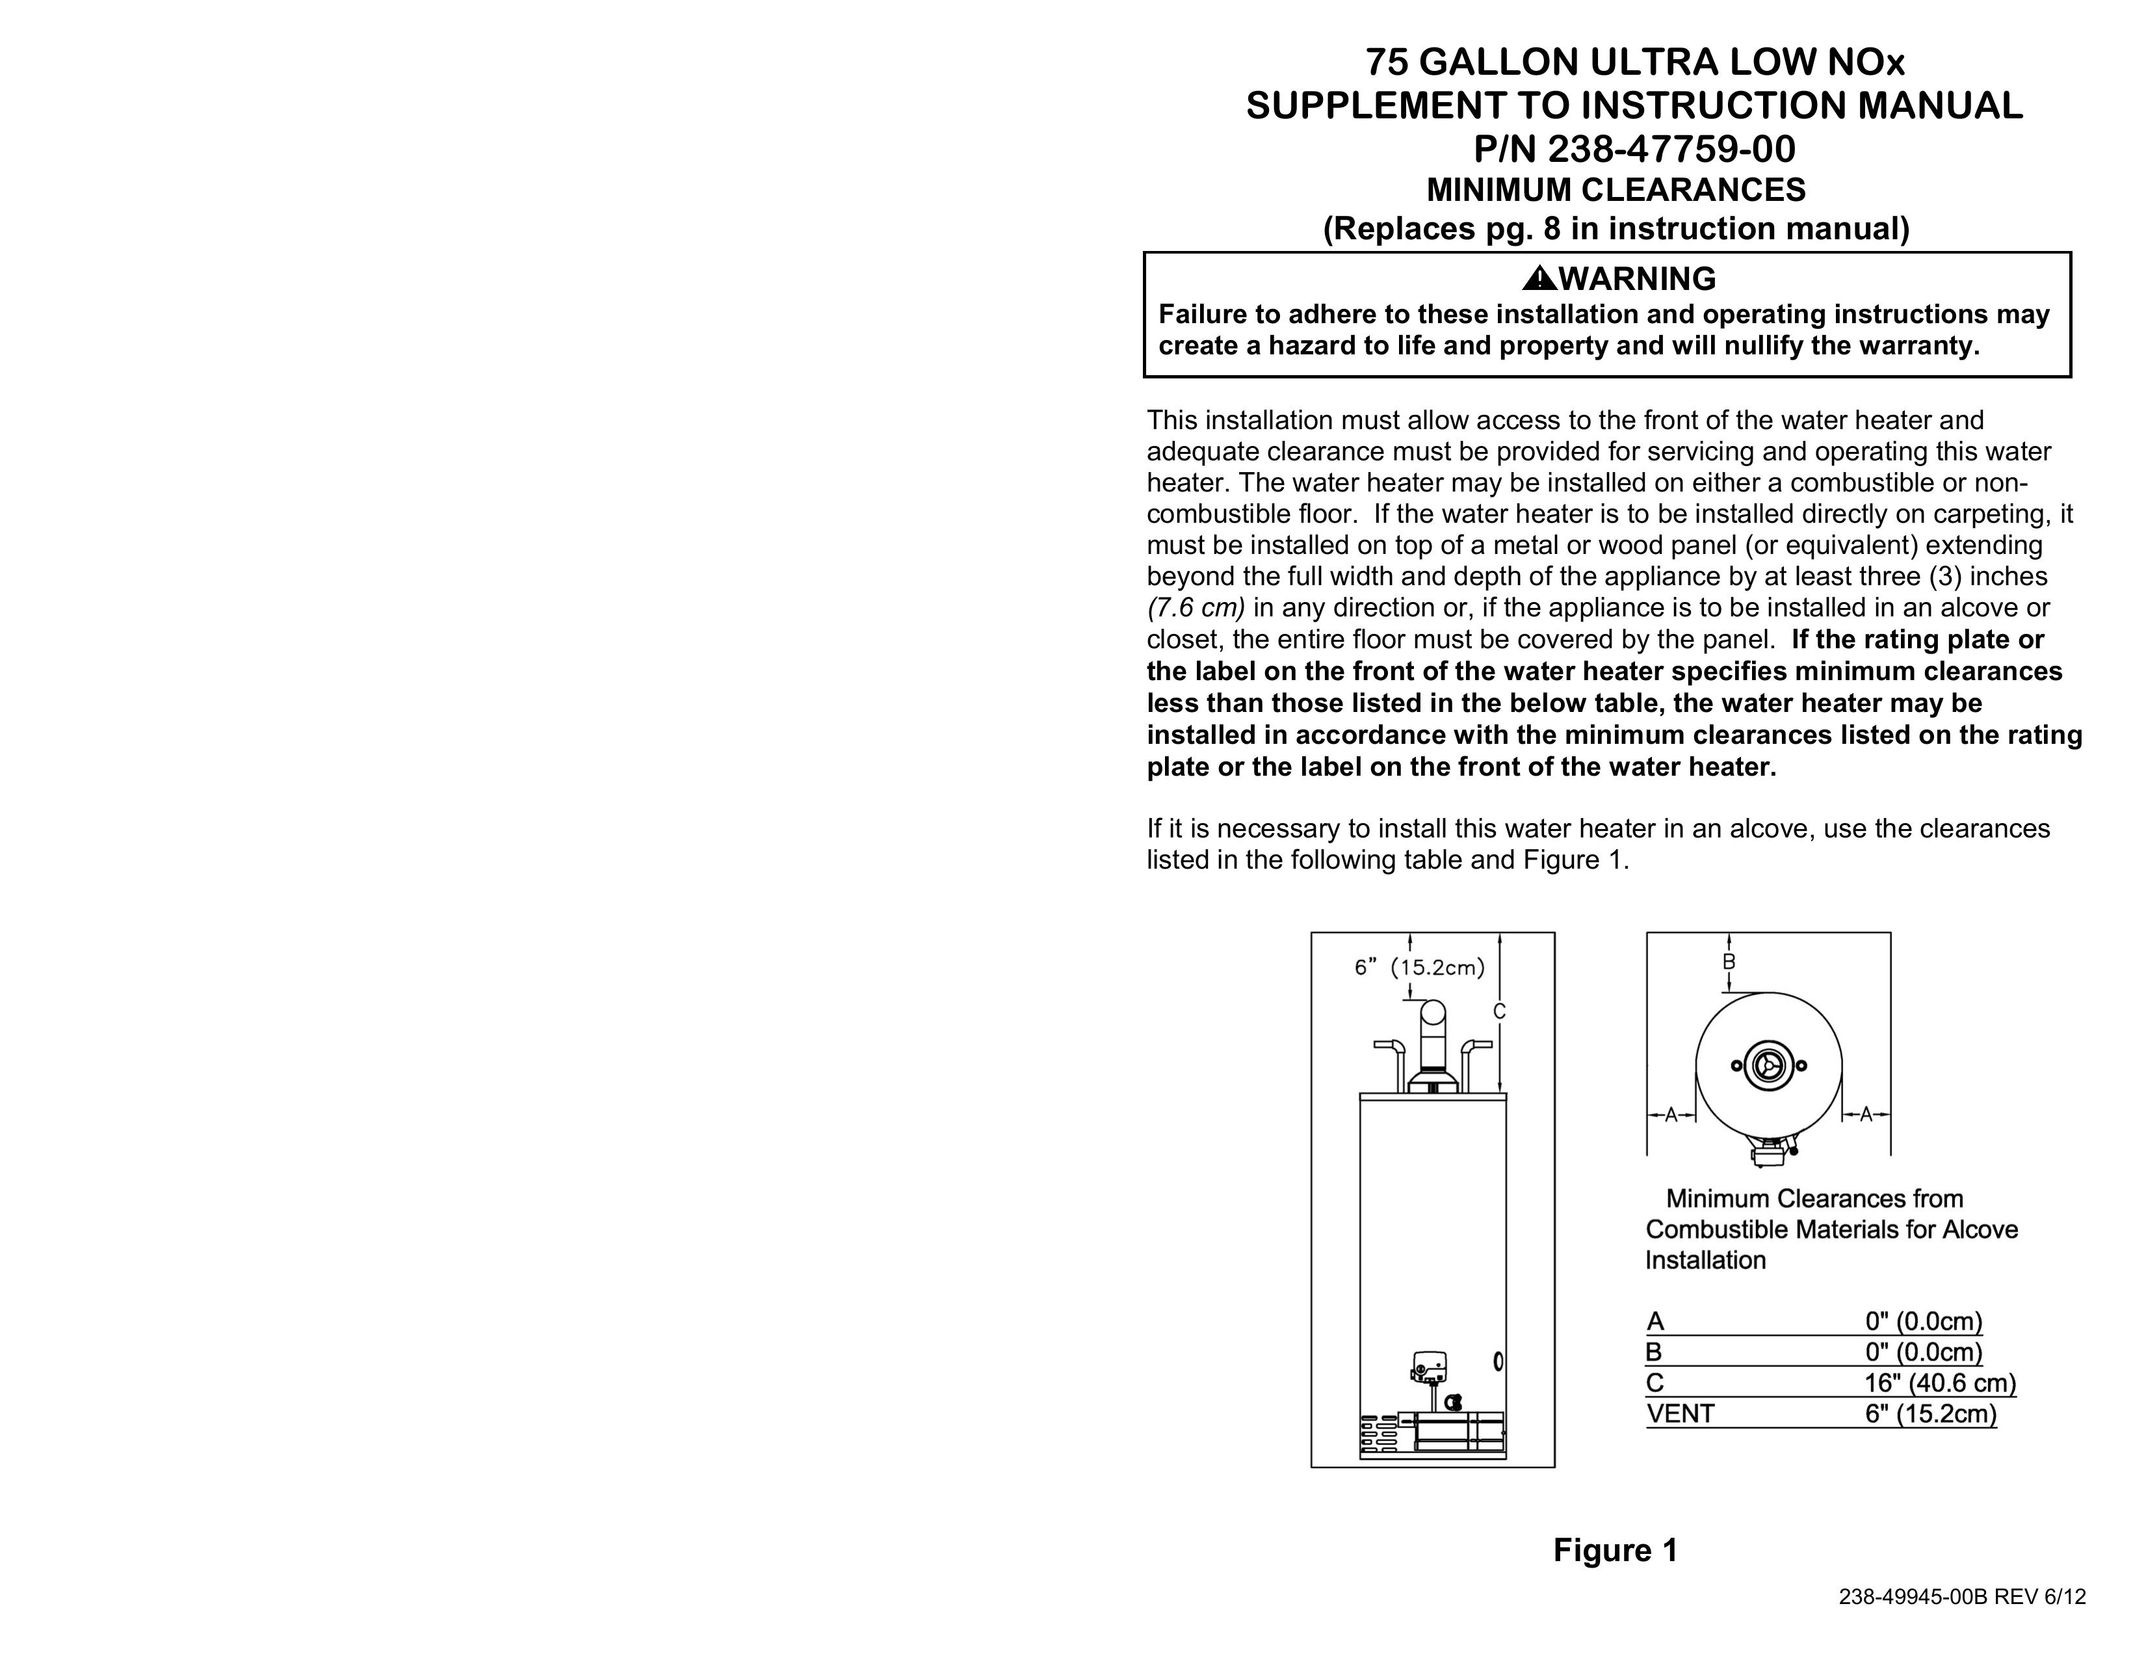 Honeywell 75 GALLON ULTRA LOW NOx Water Heater User Manual